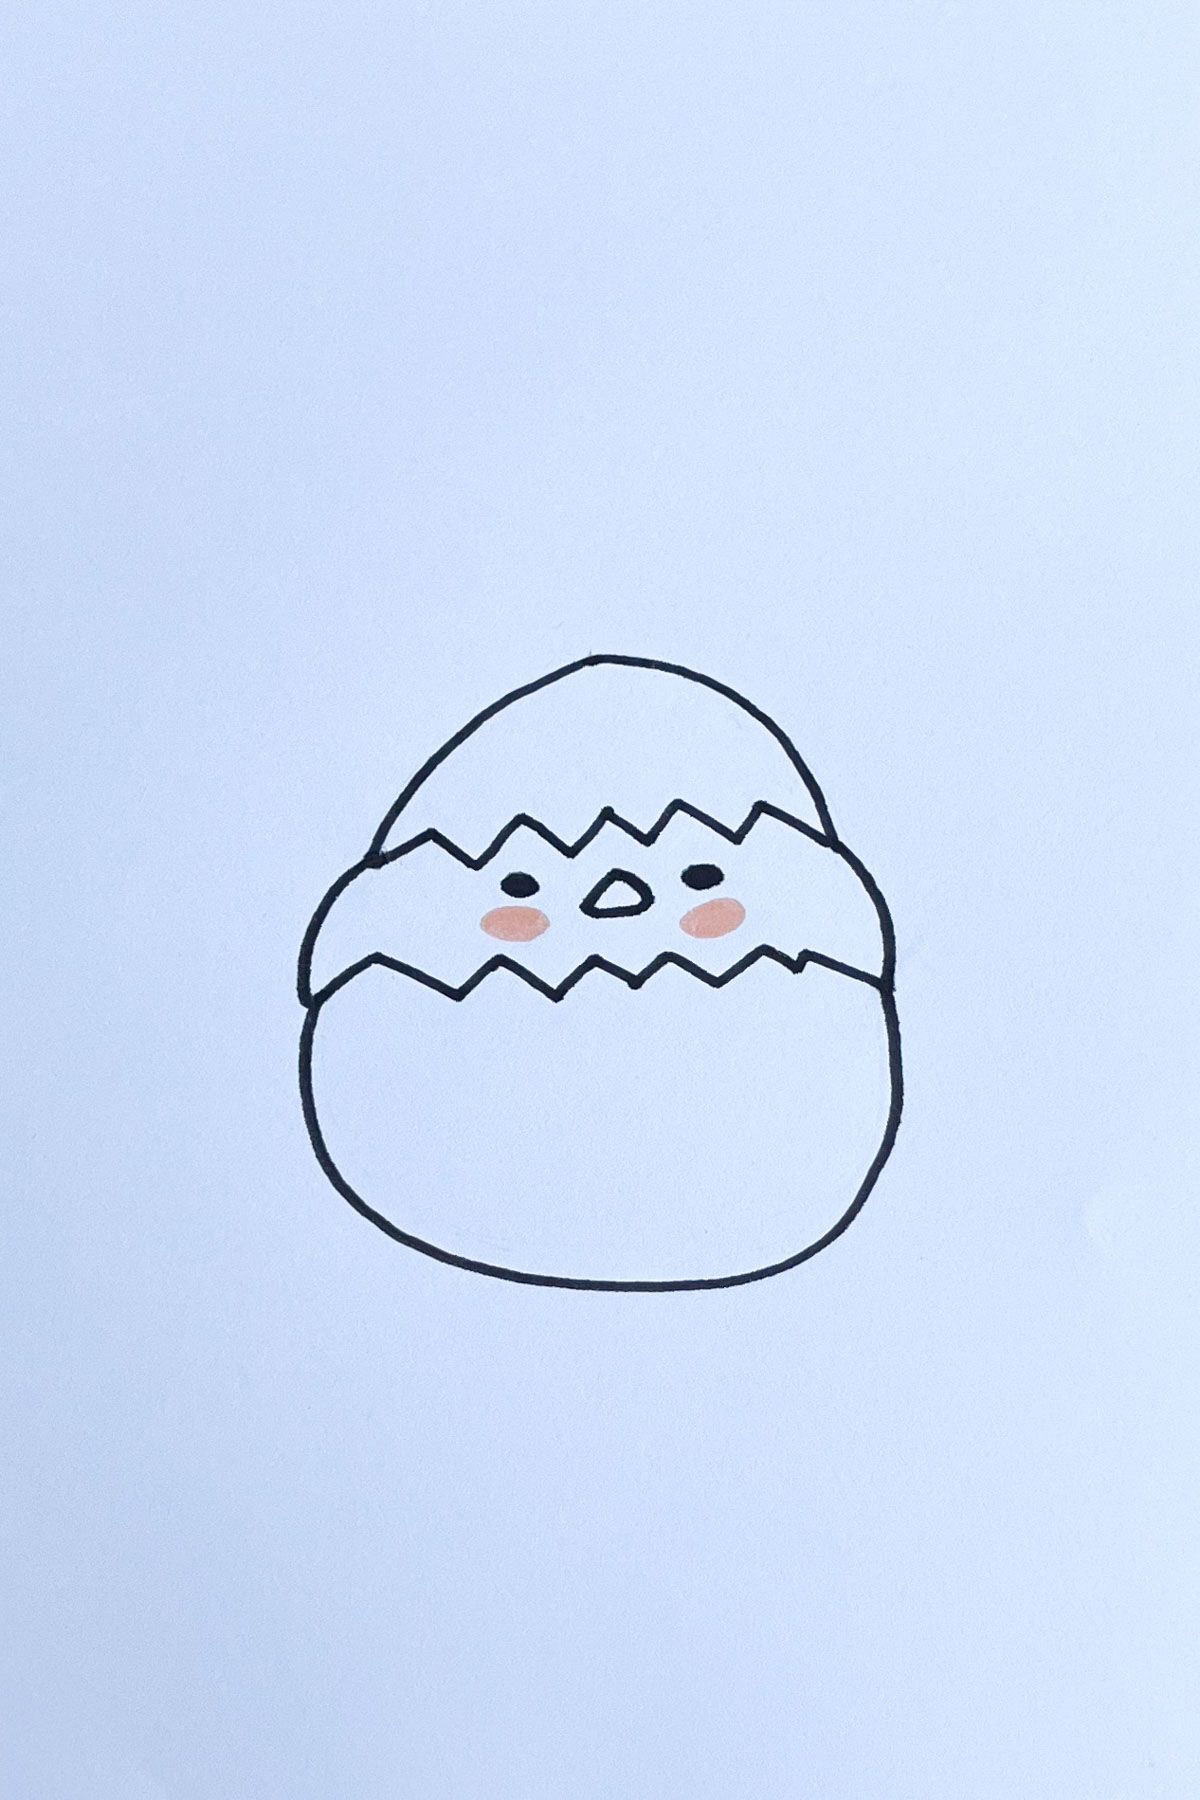 cracking egg anime drawing